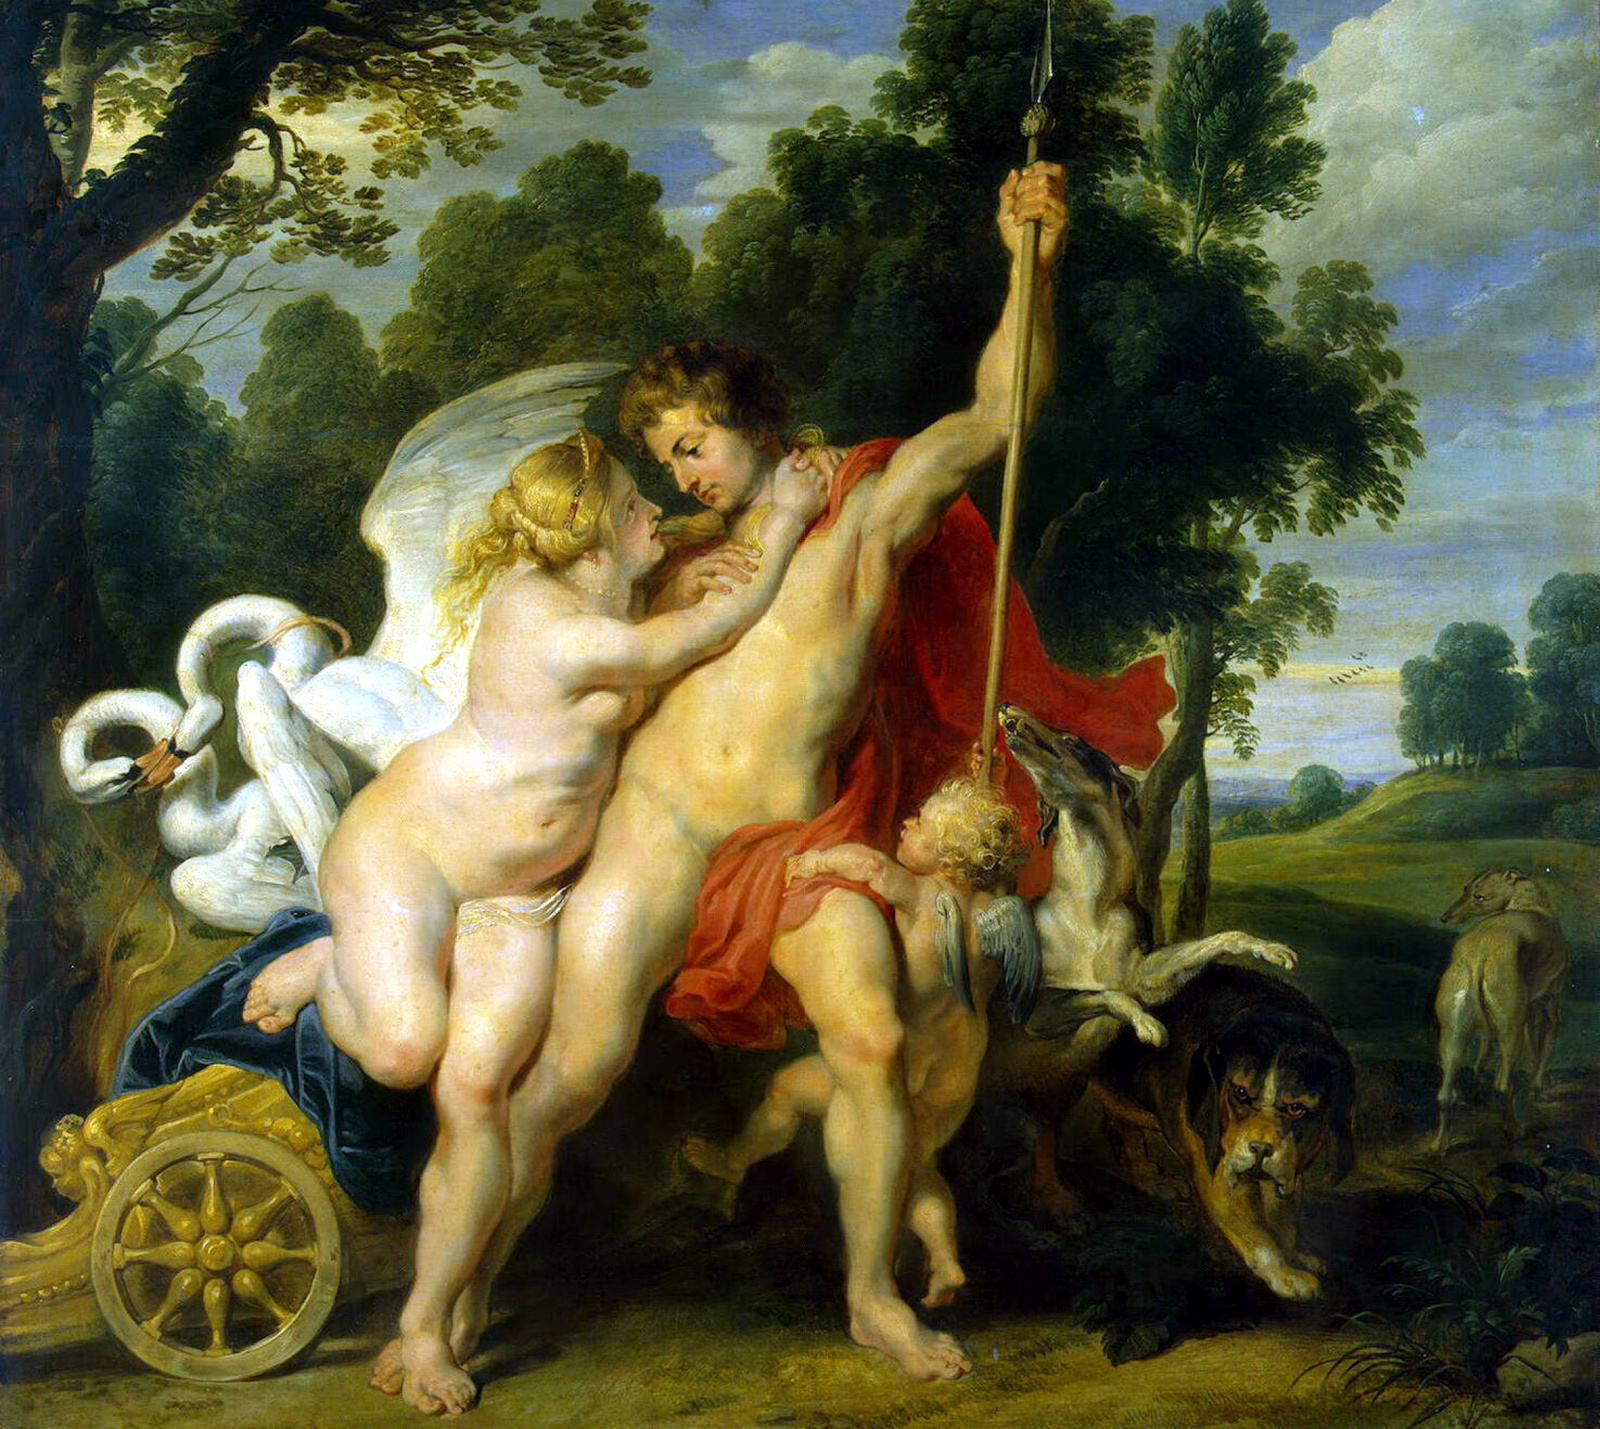 Nude painting: Rubens, part 2 - NSFW, Erotic, Rubens, Painting, Painting, Girls, Art, A selection, Longpost